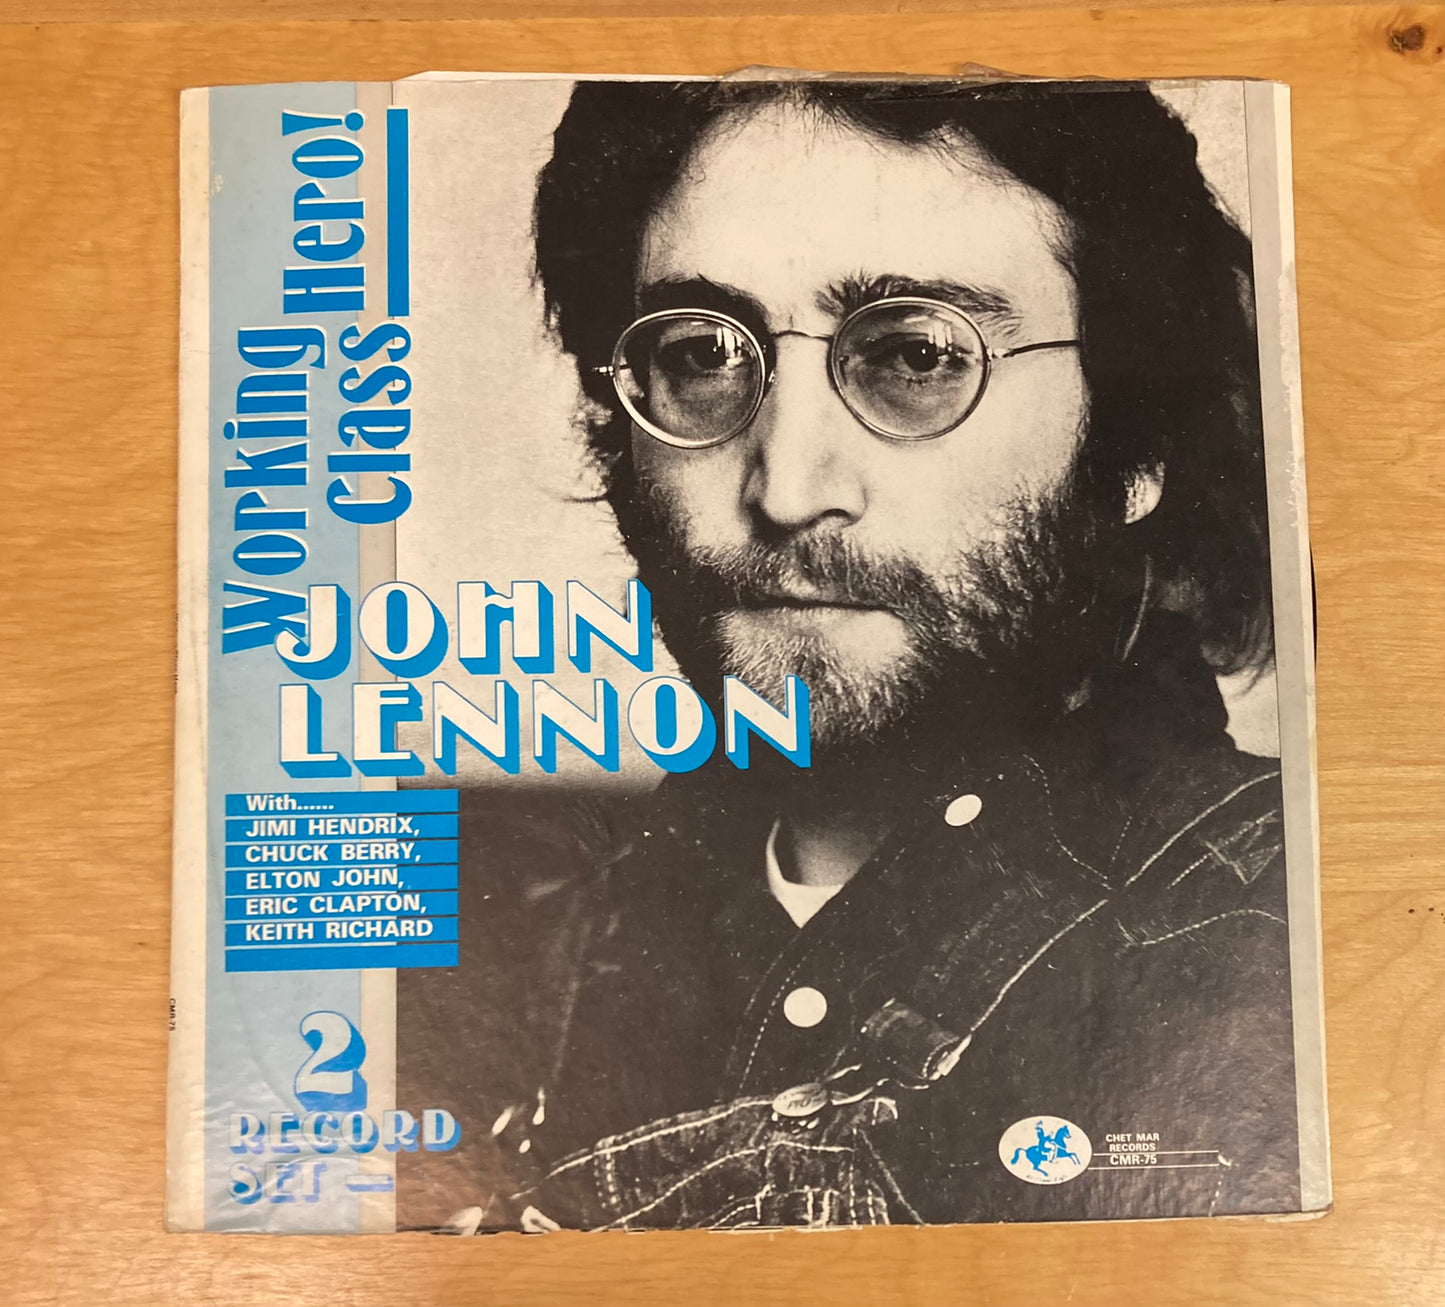 Working Class Hero! - John Lennon